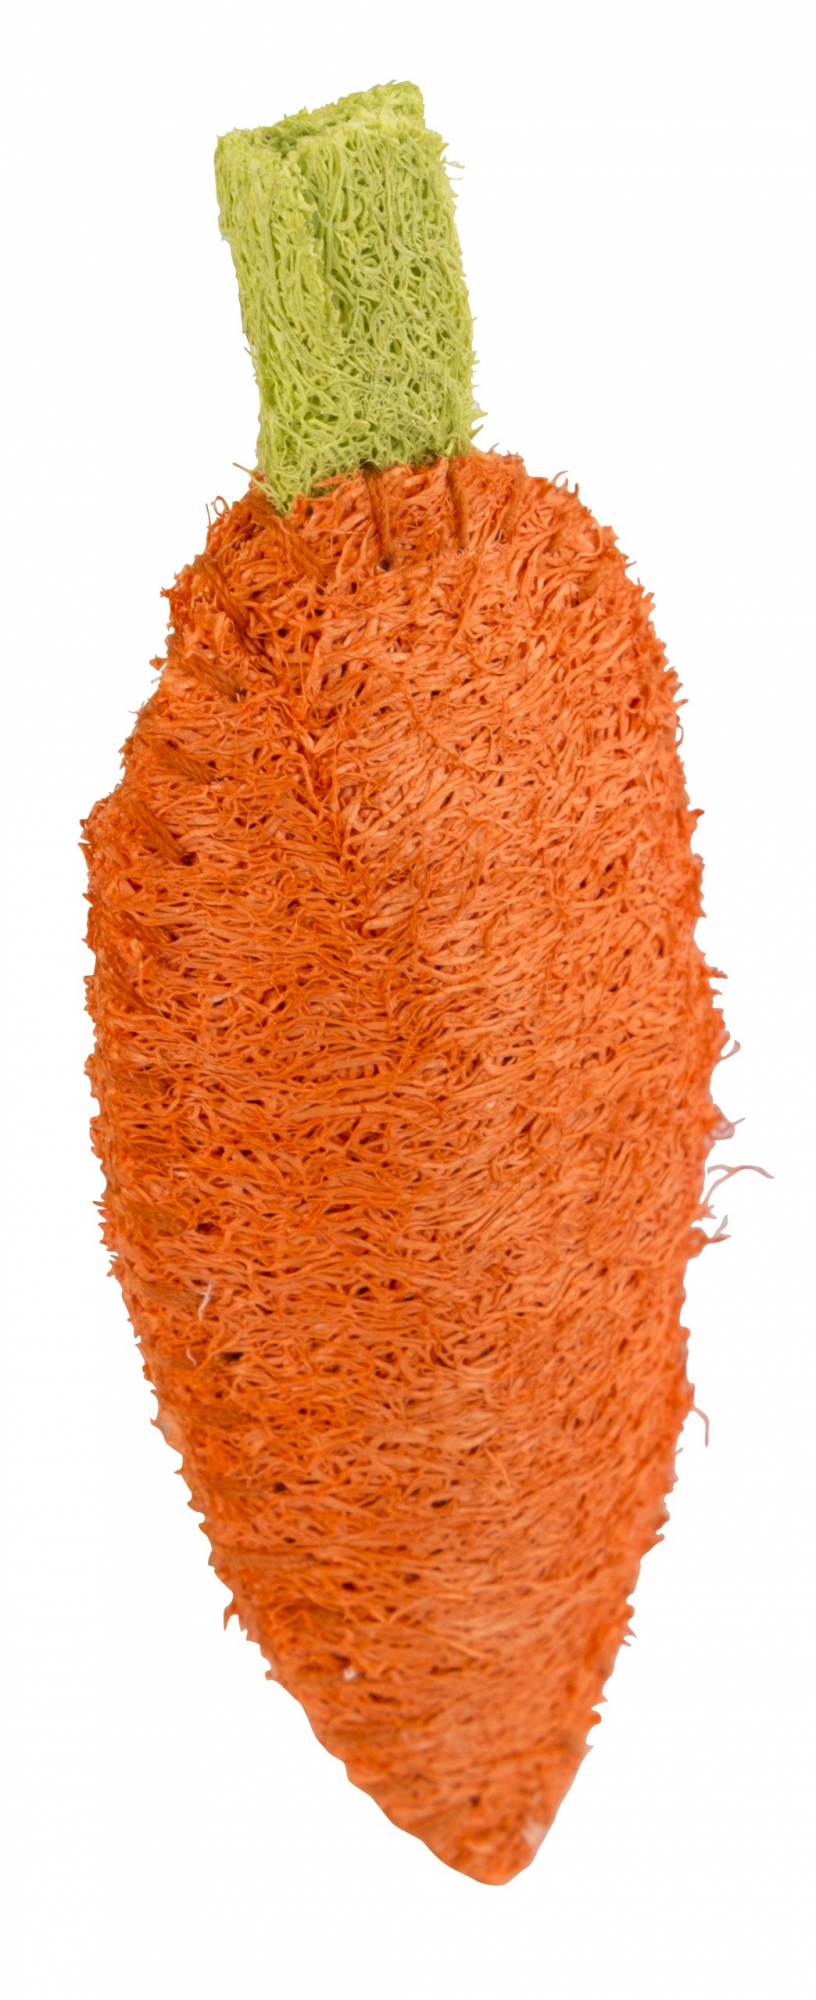 Esponja vegetal zanahoria 10 cm